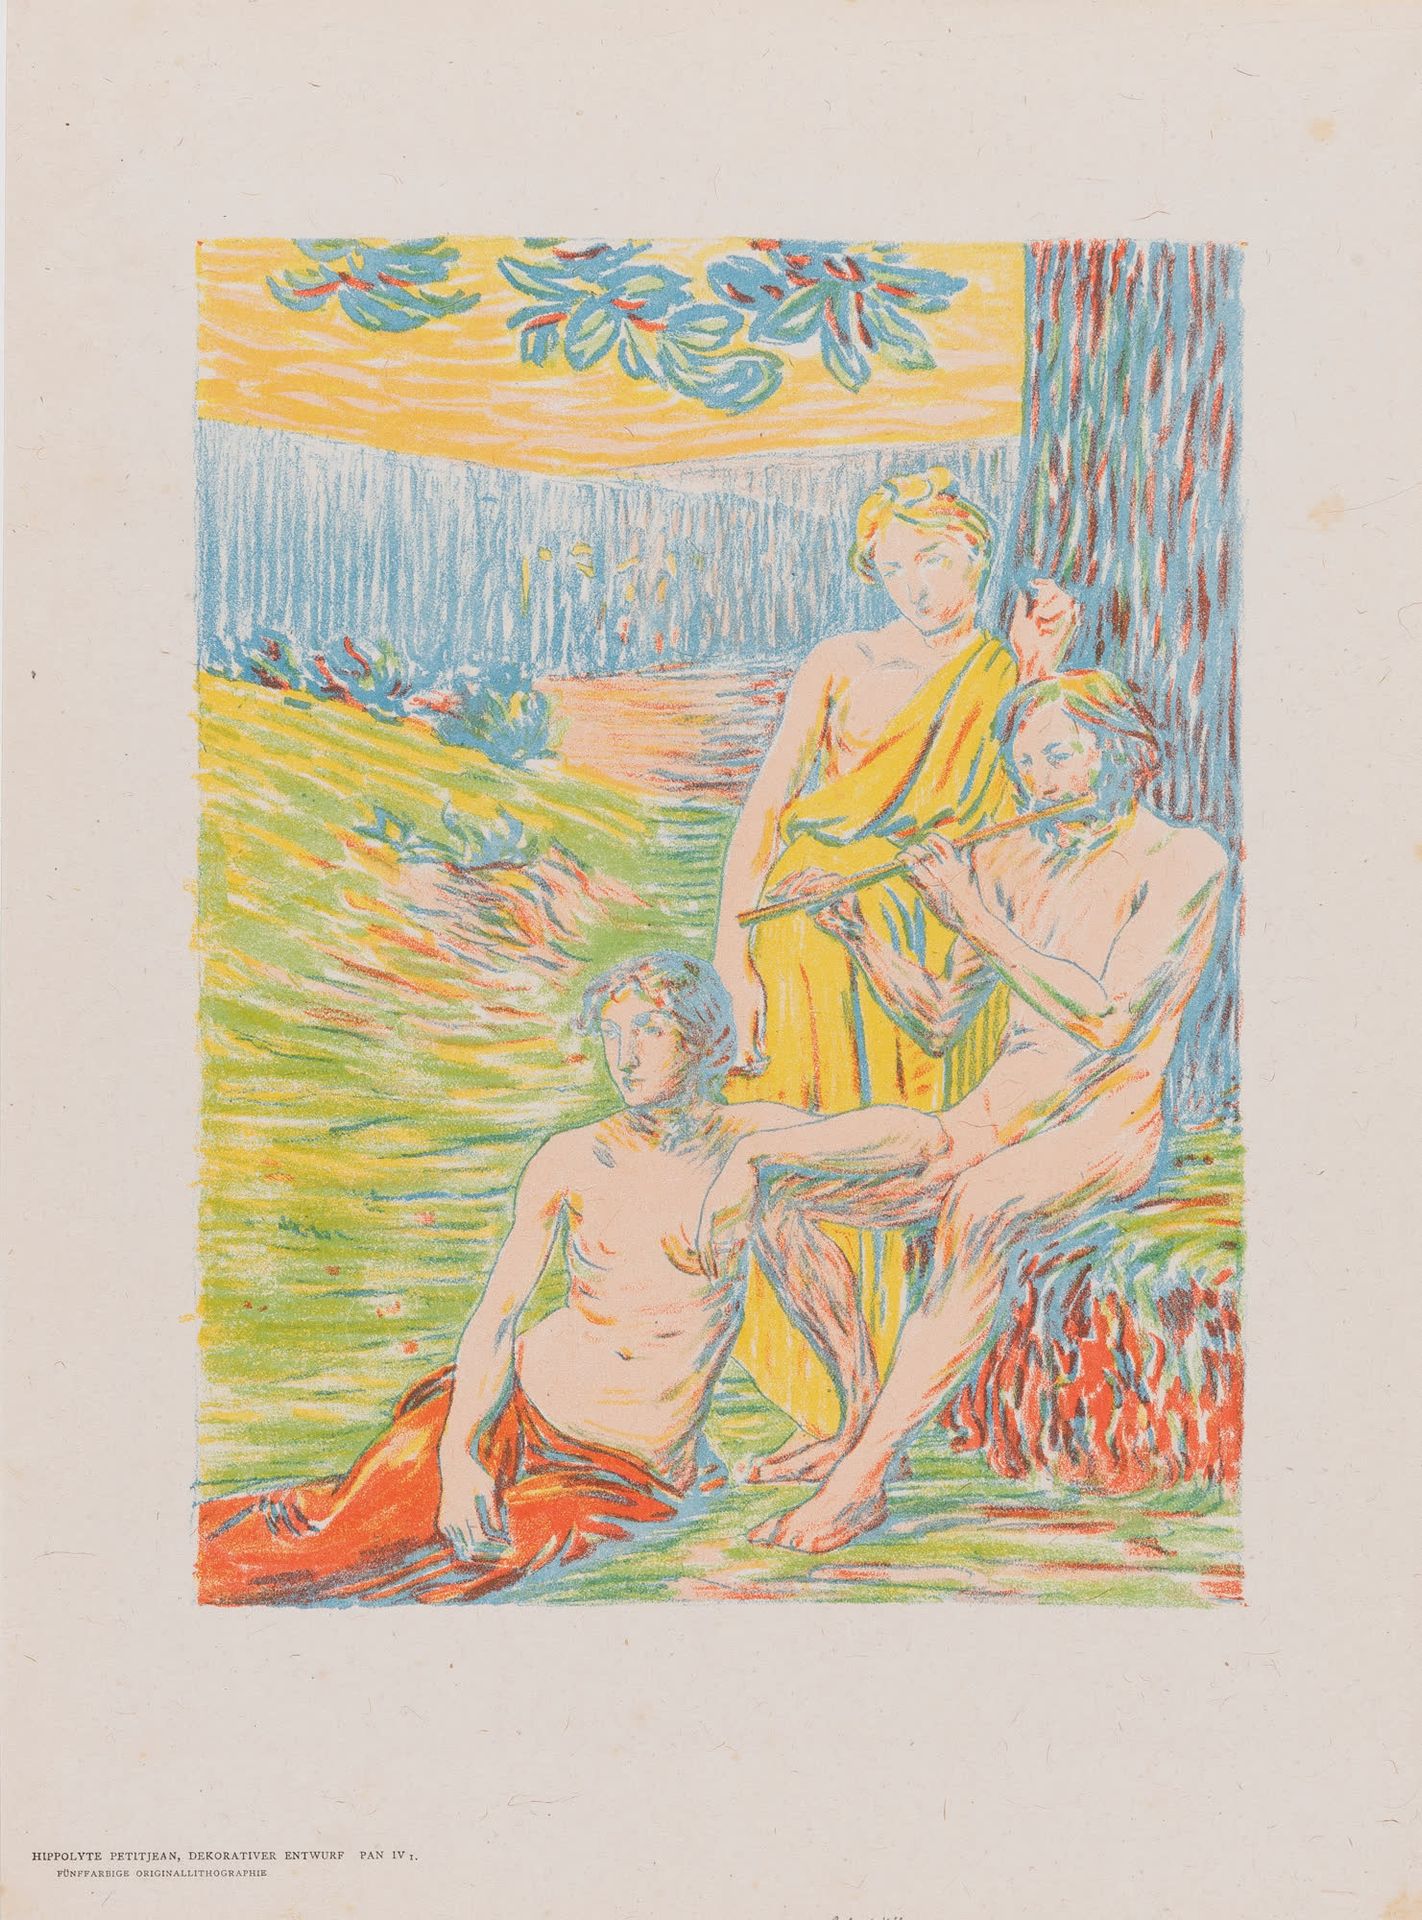 Hippolyte PETITJEAN (1854-1929) 潘神，1895年。
彩色石版画。
非贸易副本，注释HCVII。
Kleuren石版画。
Niet&hellip;